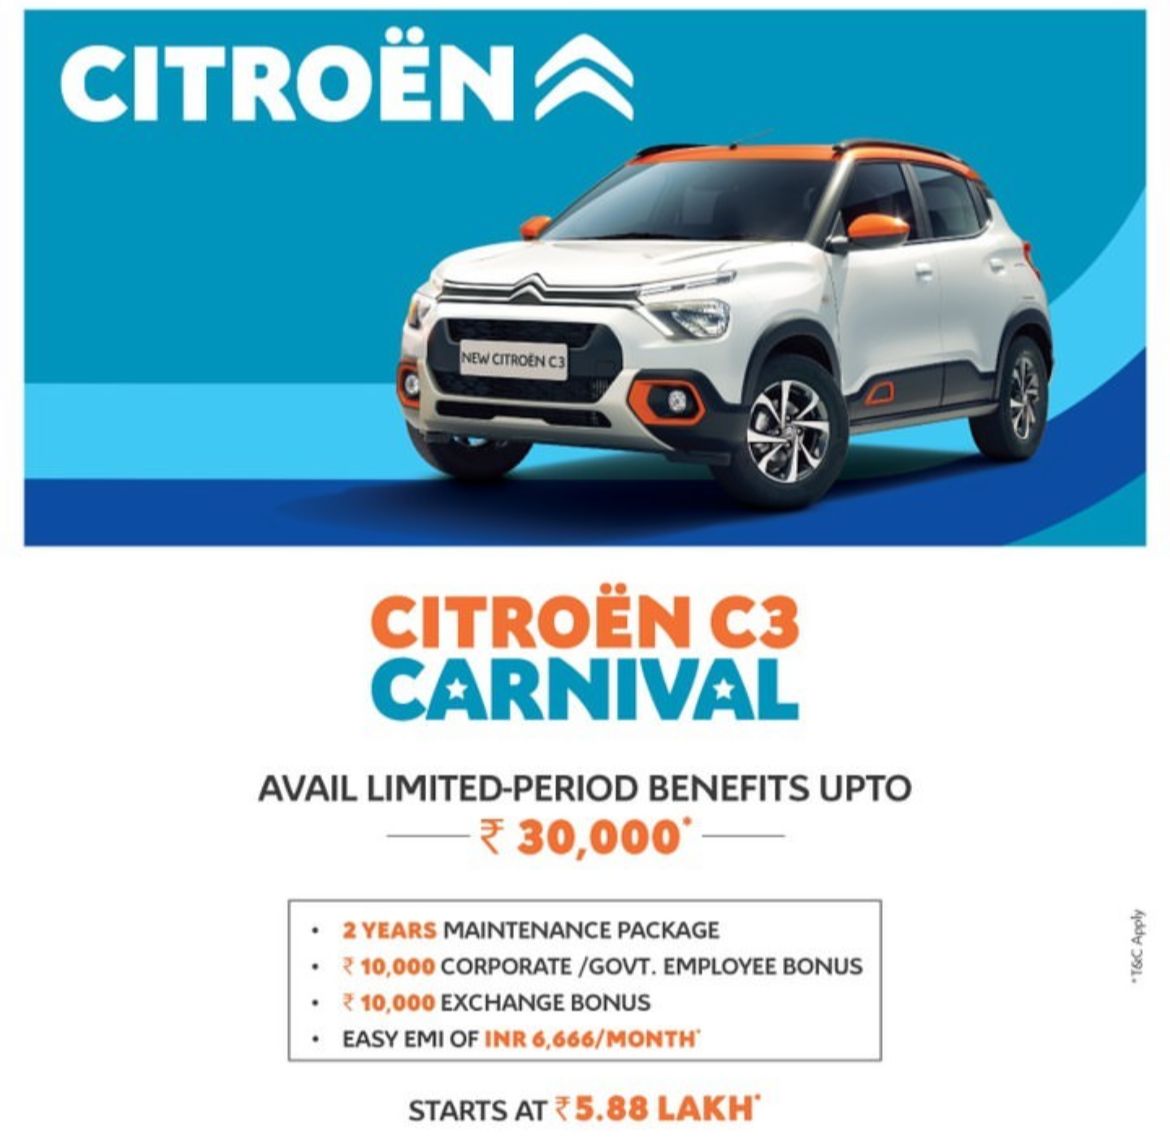 Citroen Organizes C3 Carnival Offer At Dealerships Nationwide